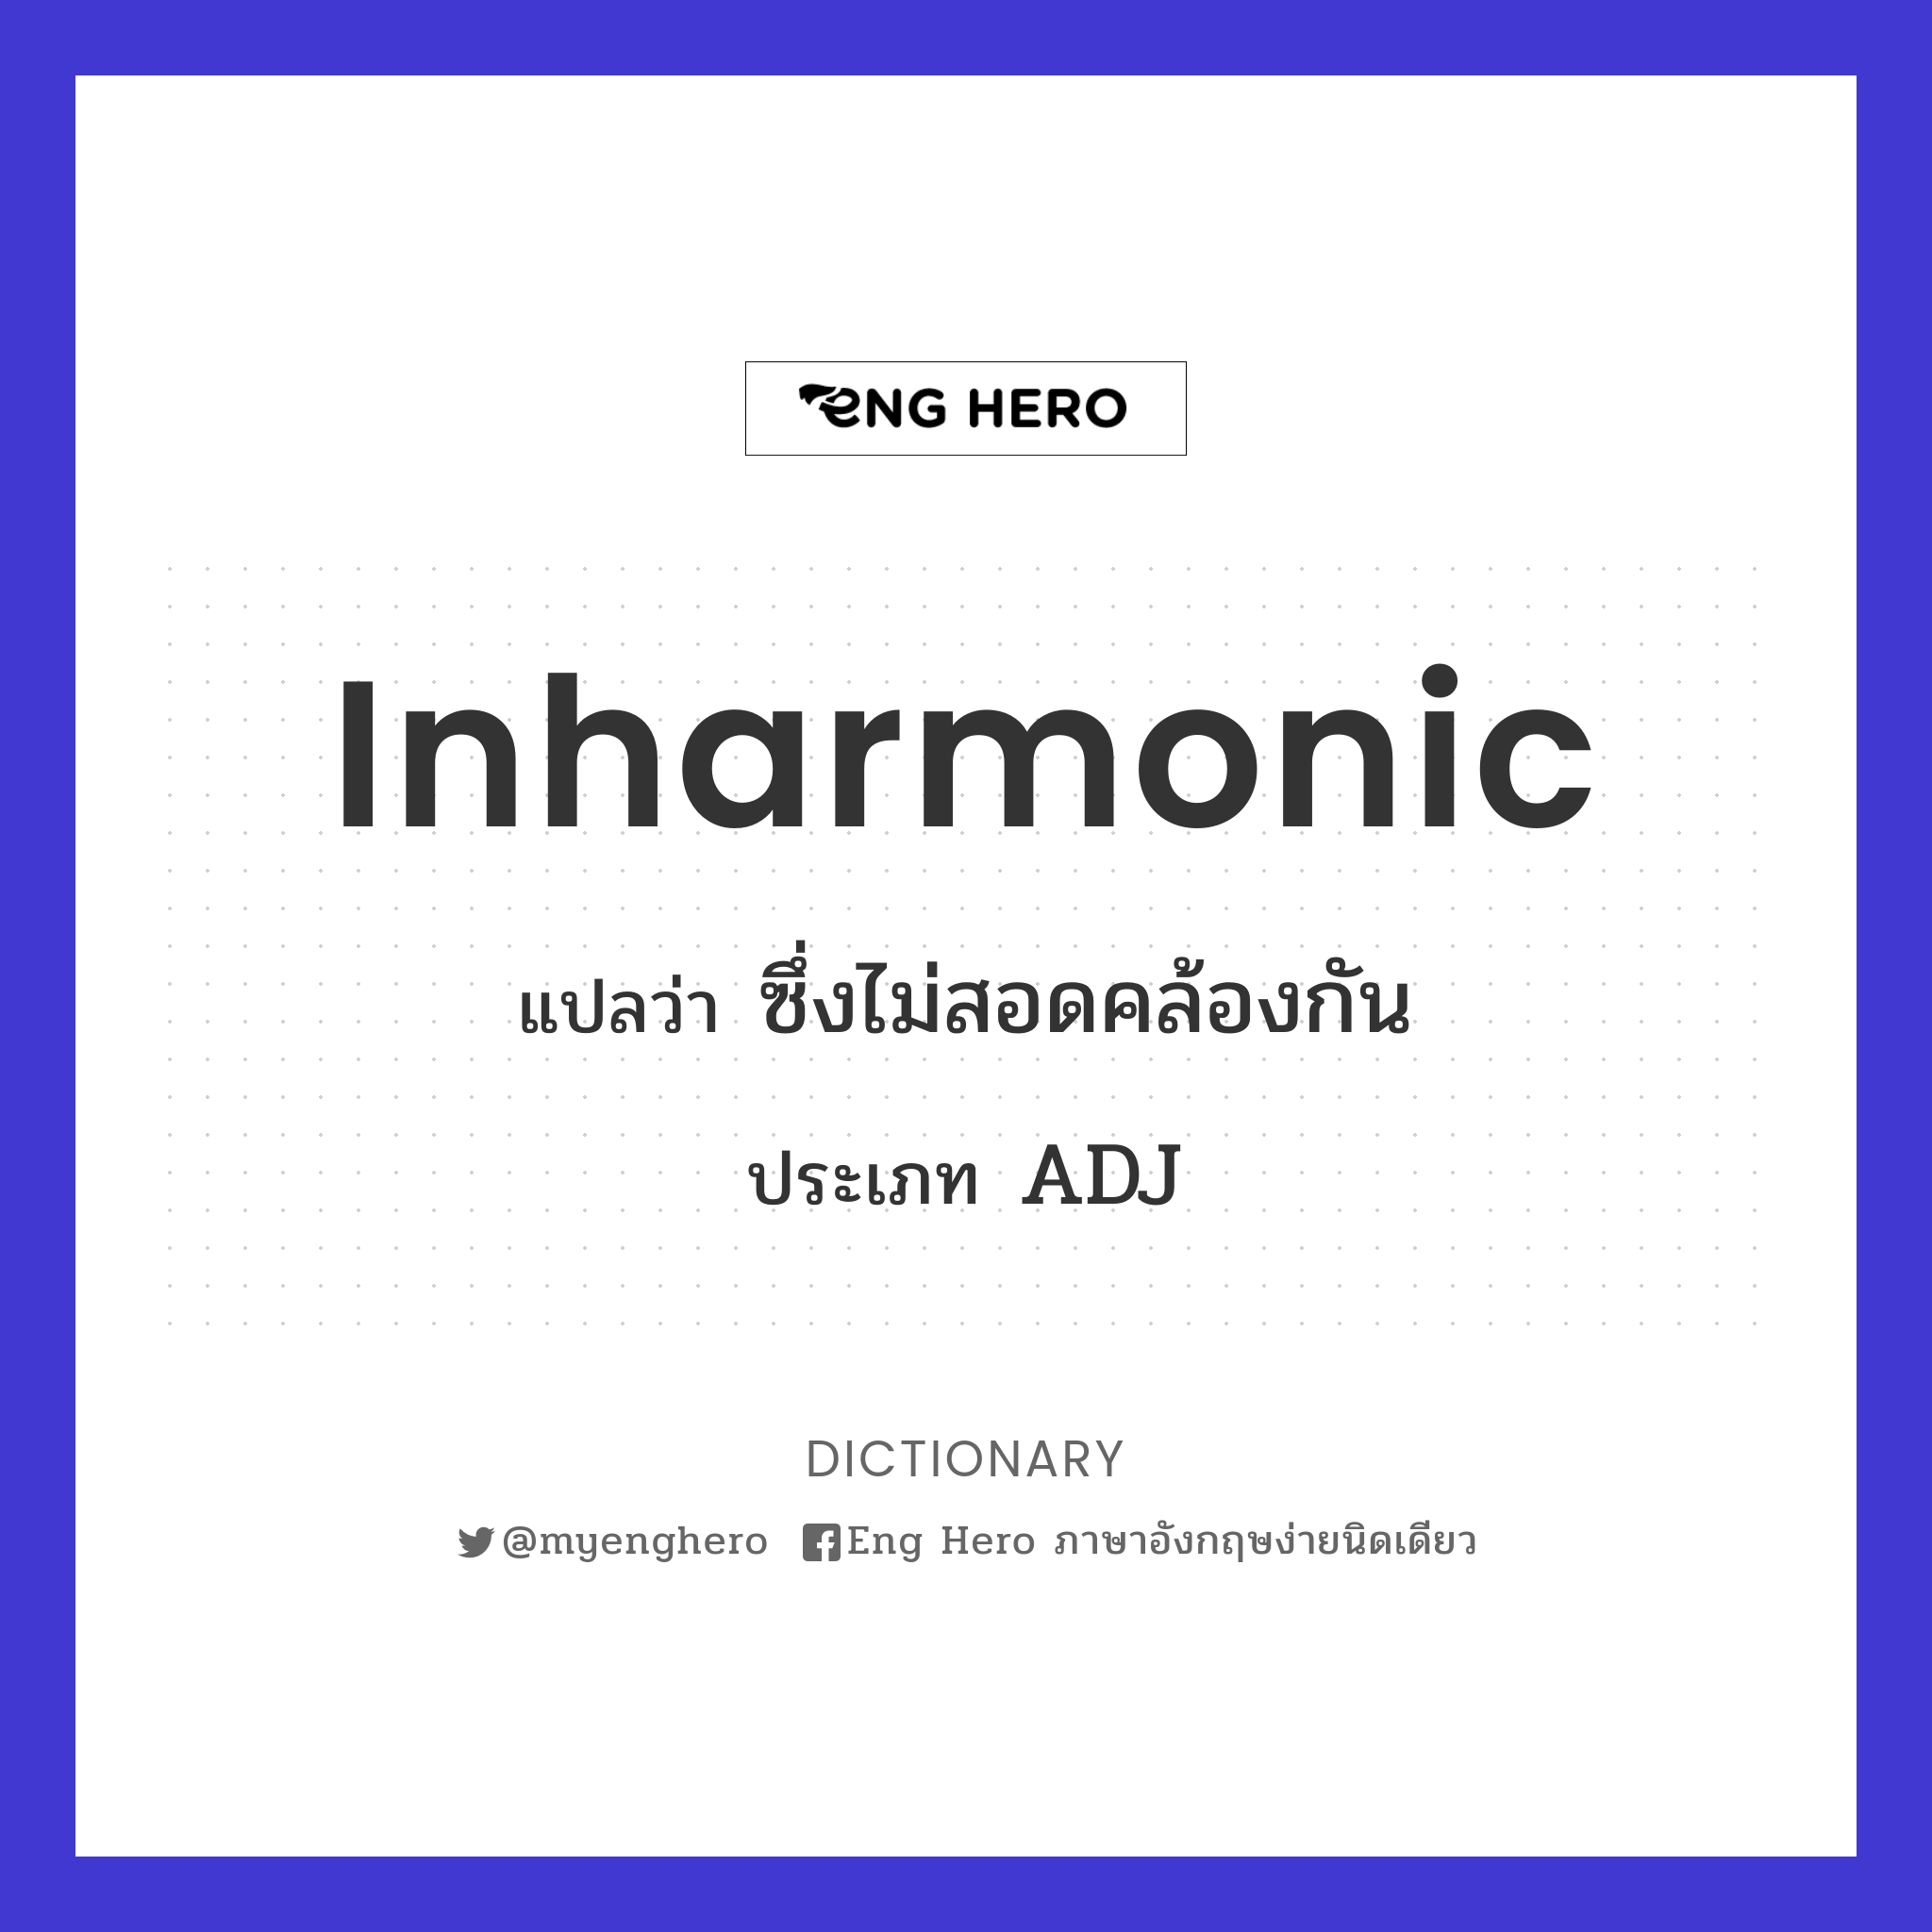 inharmonic